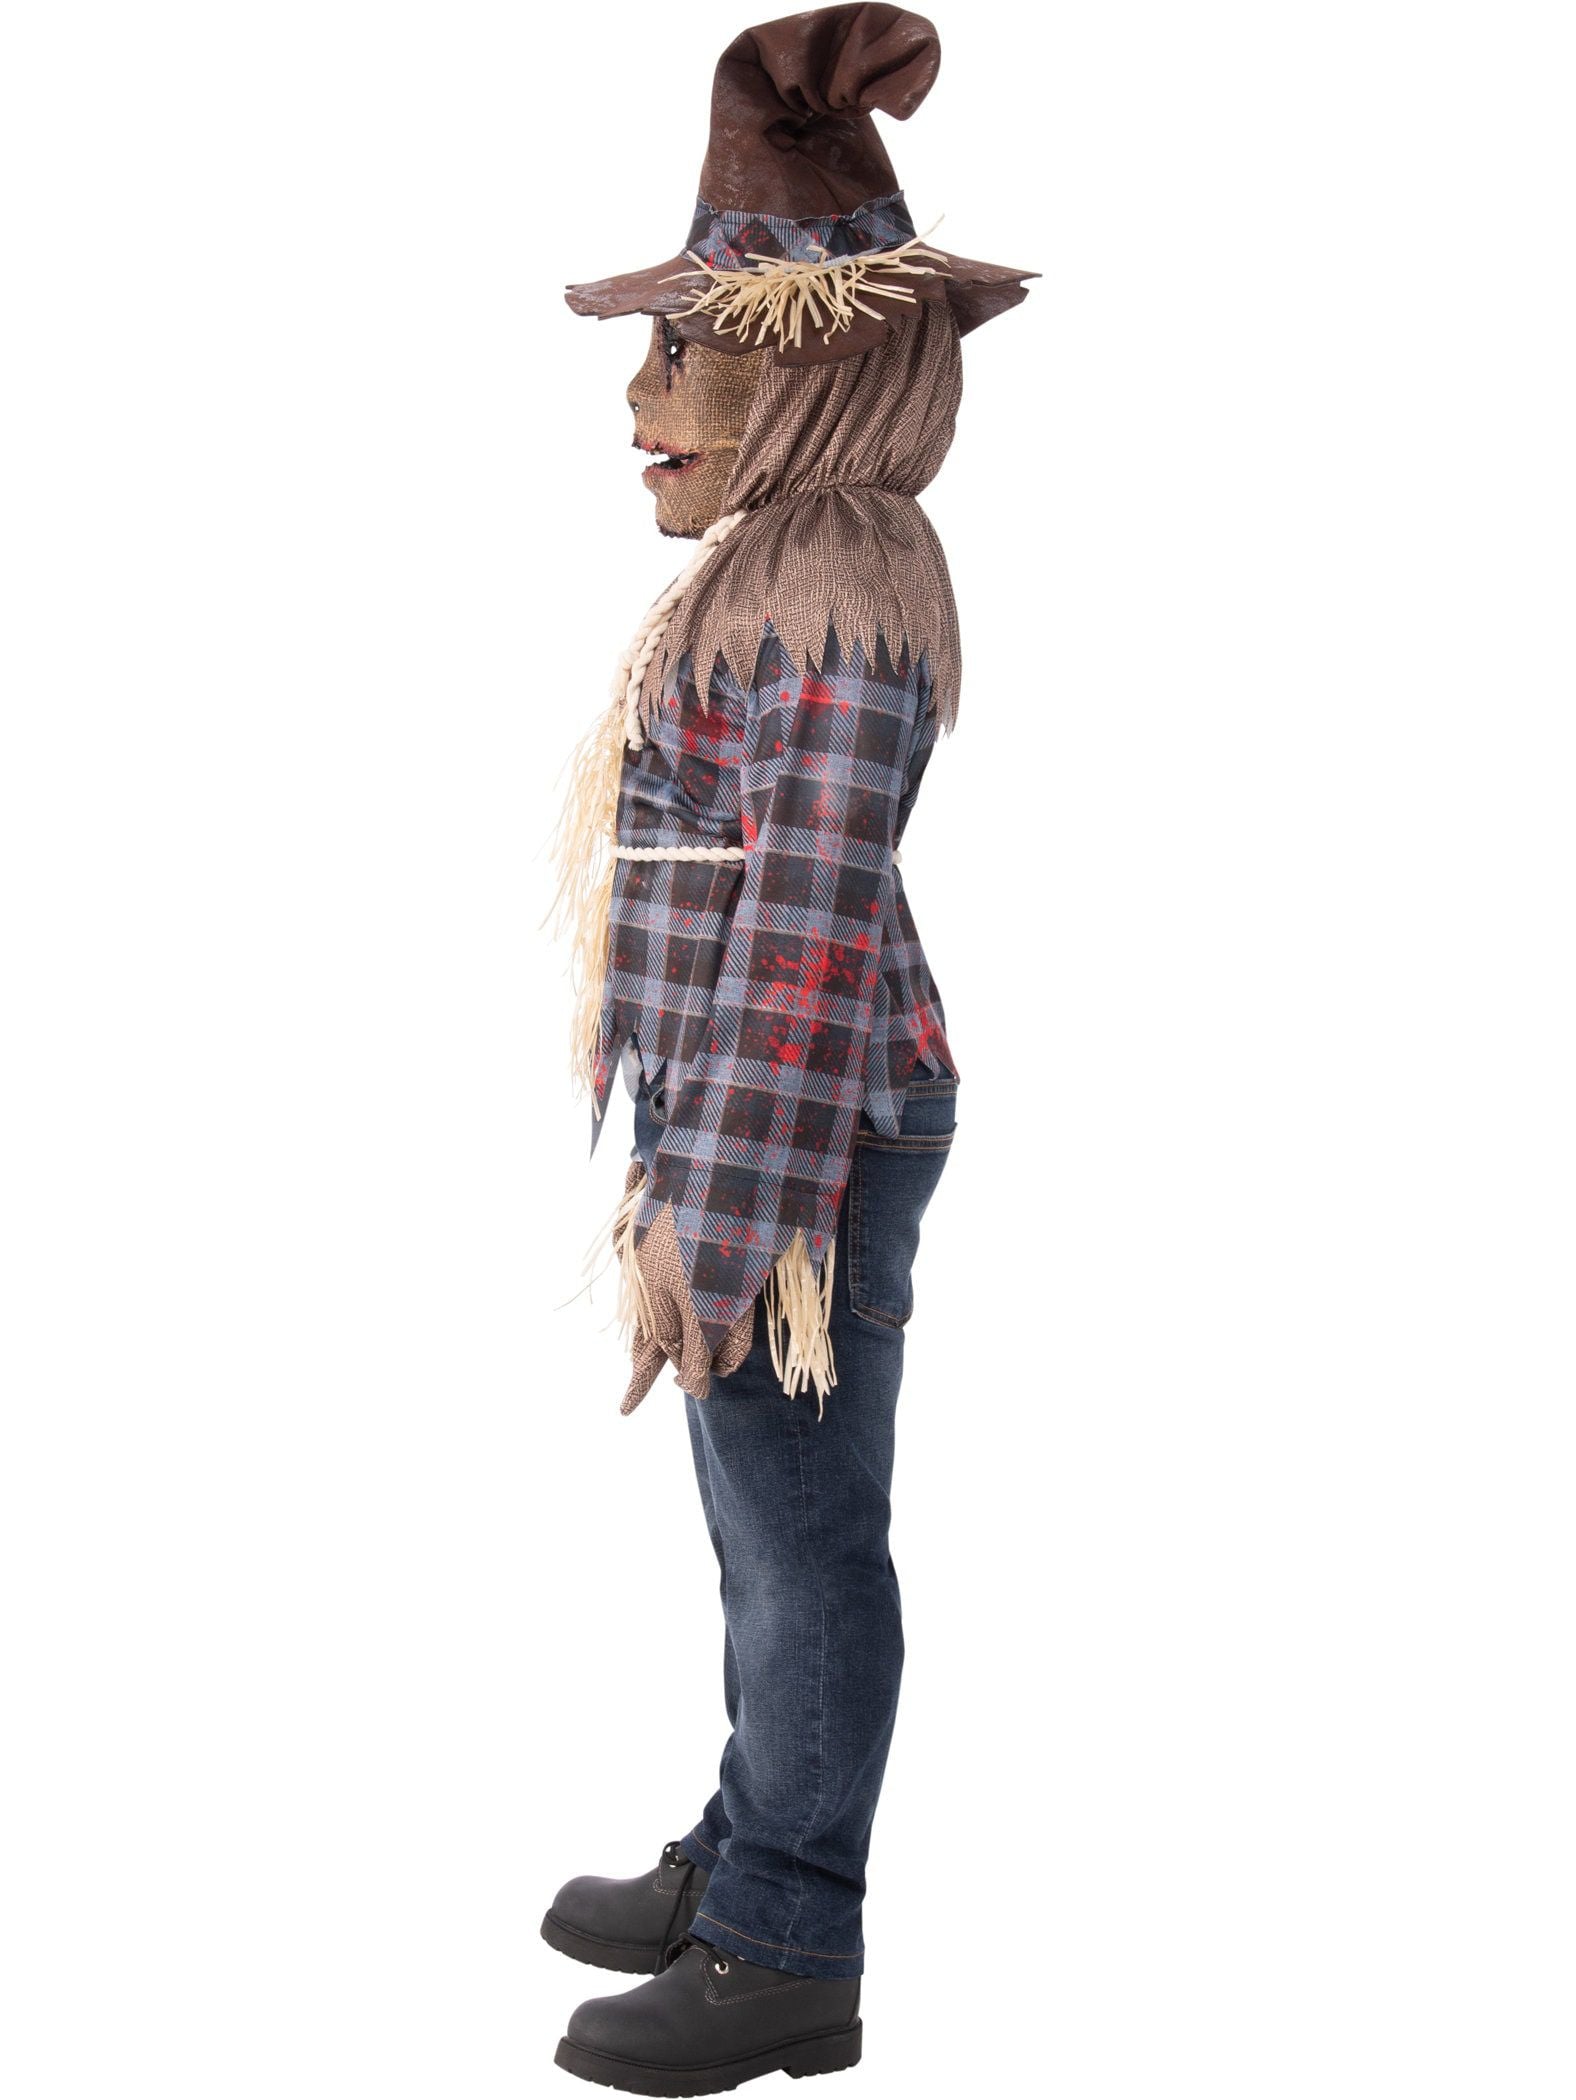 Kids' Spooky Scarecrow Costume - costumes.com